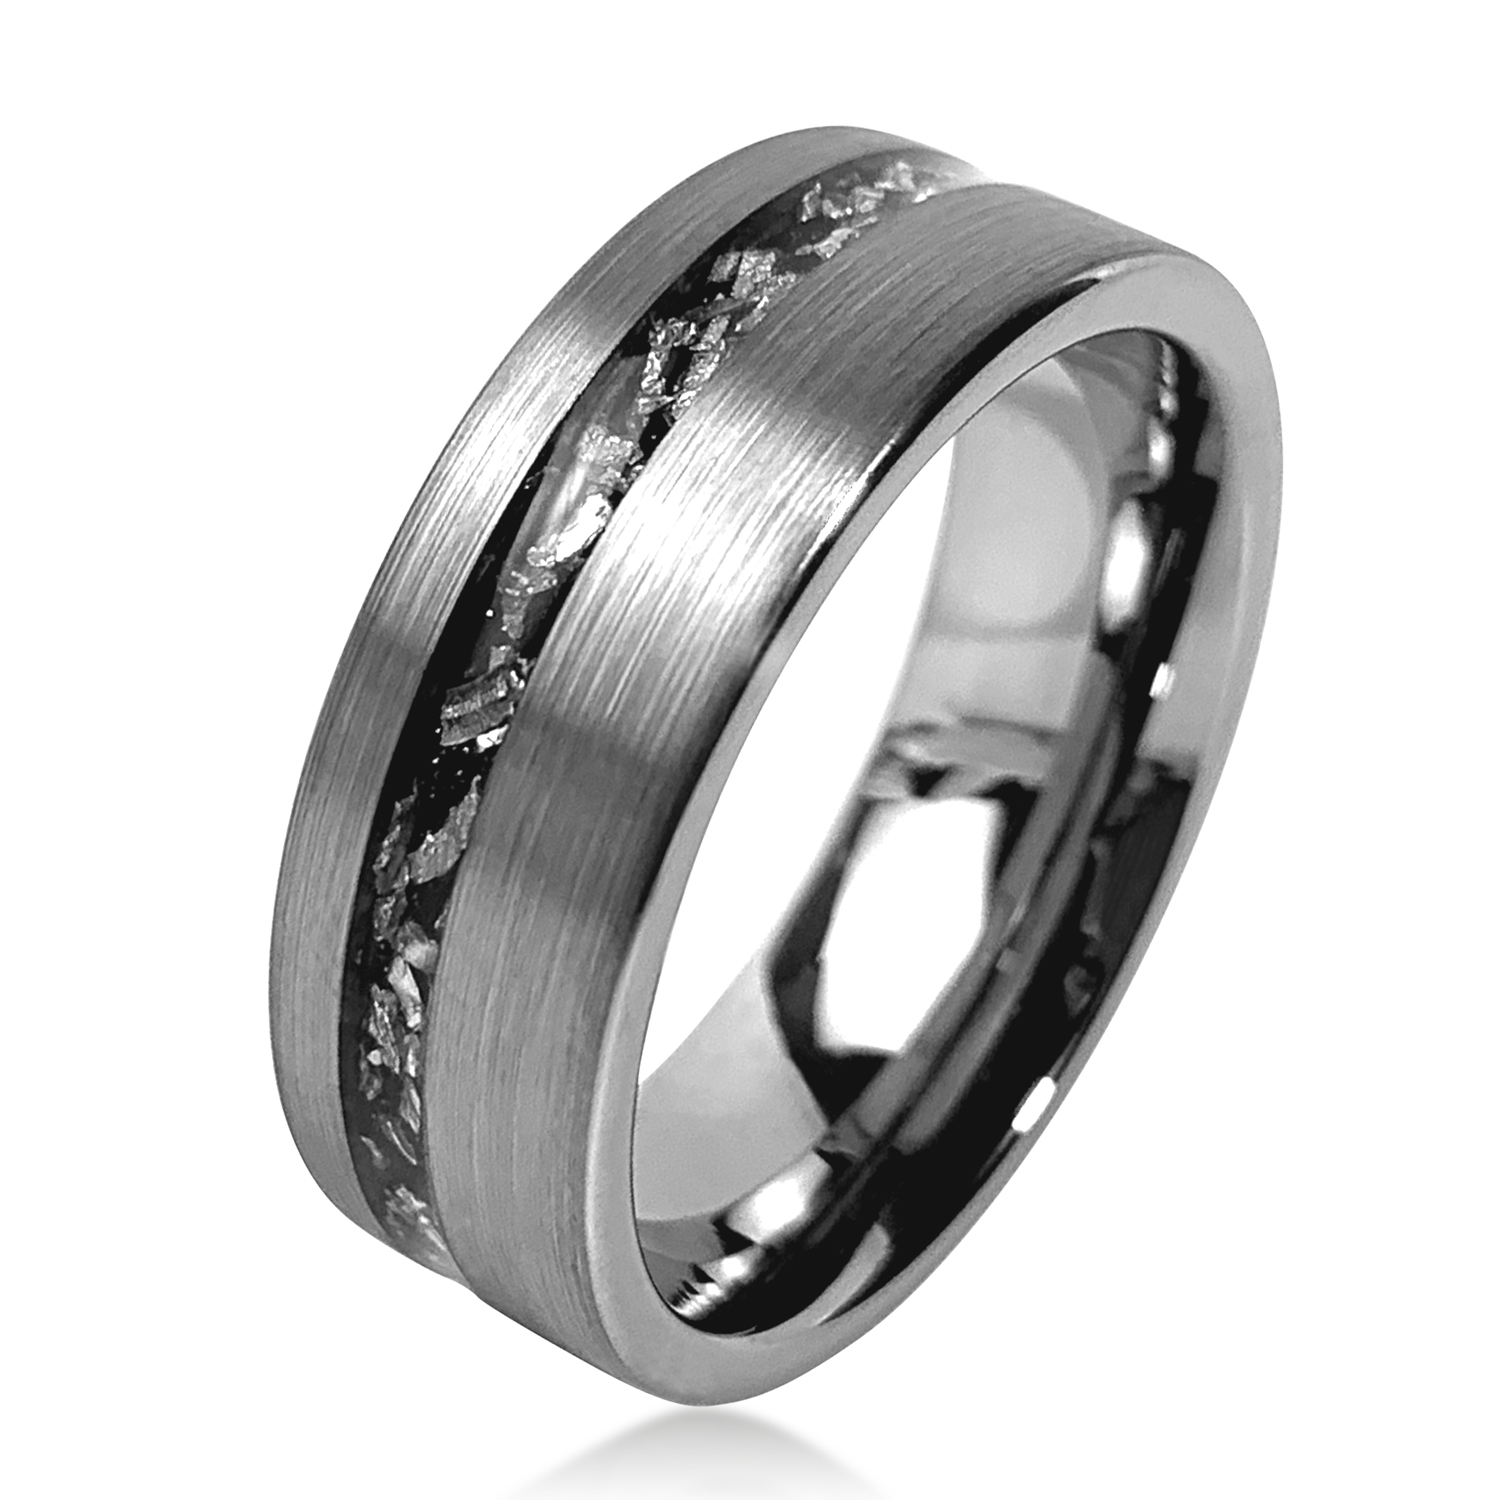 Popular Matt Black Tungsten Ring With Crushed Meteorite Inlay Featured Image